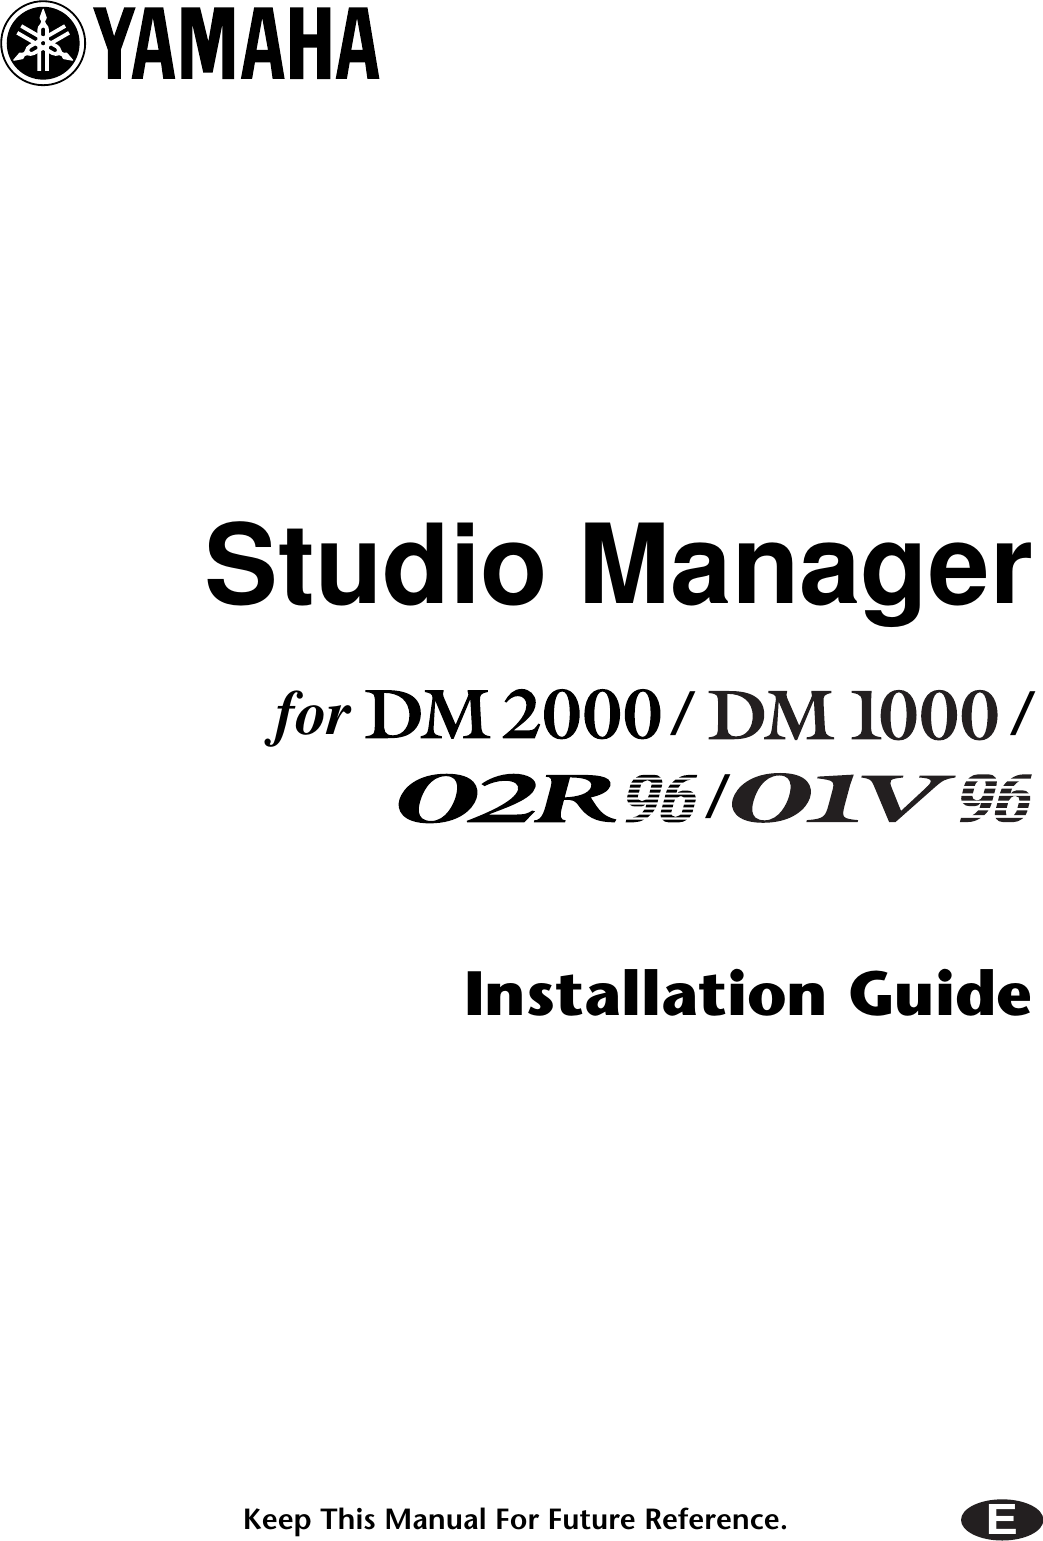 yamaha studio manager windows 10 64 bit free download